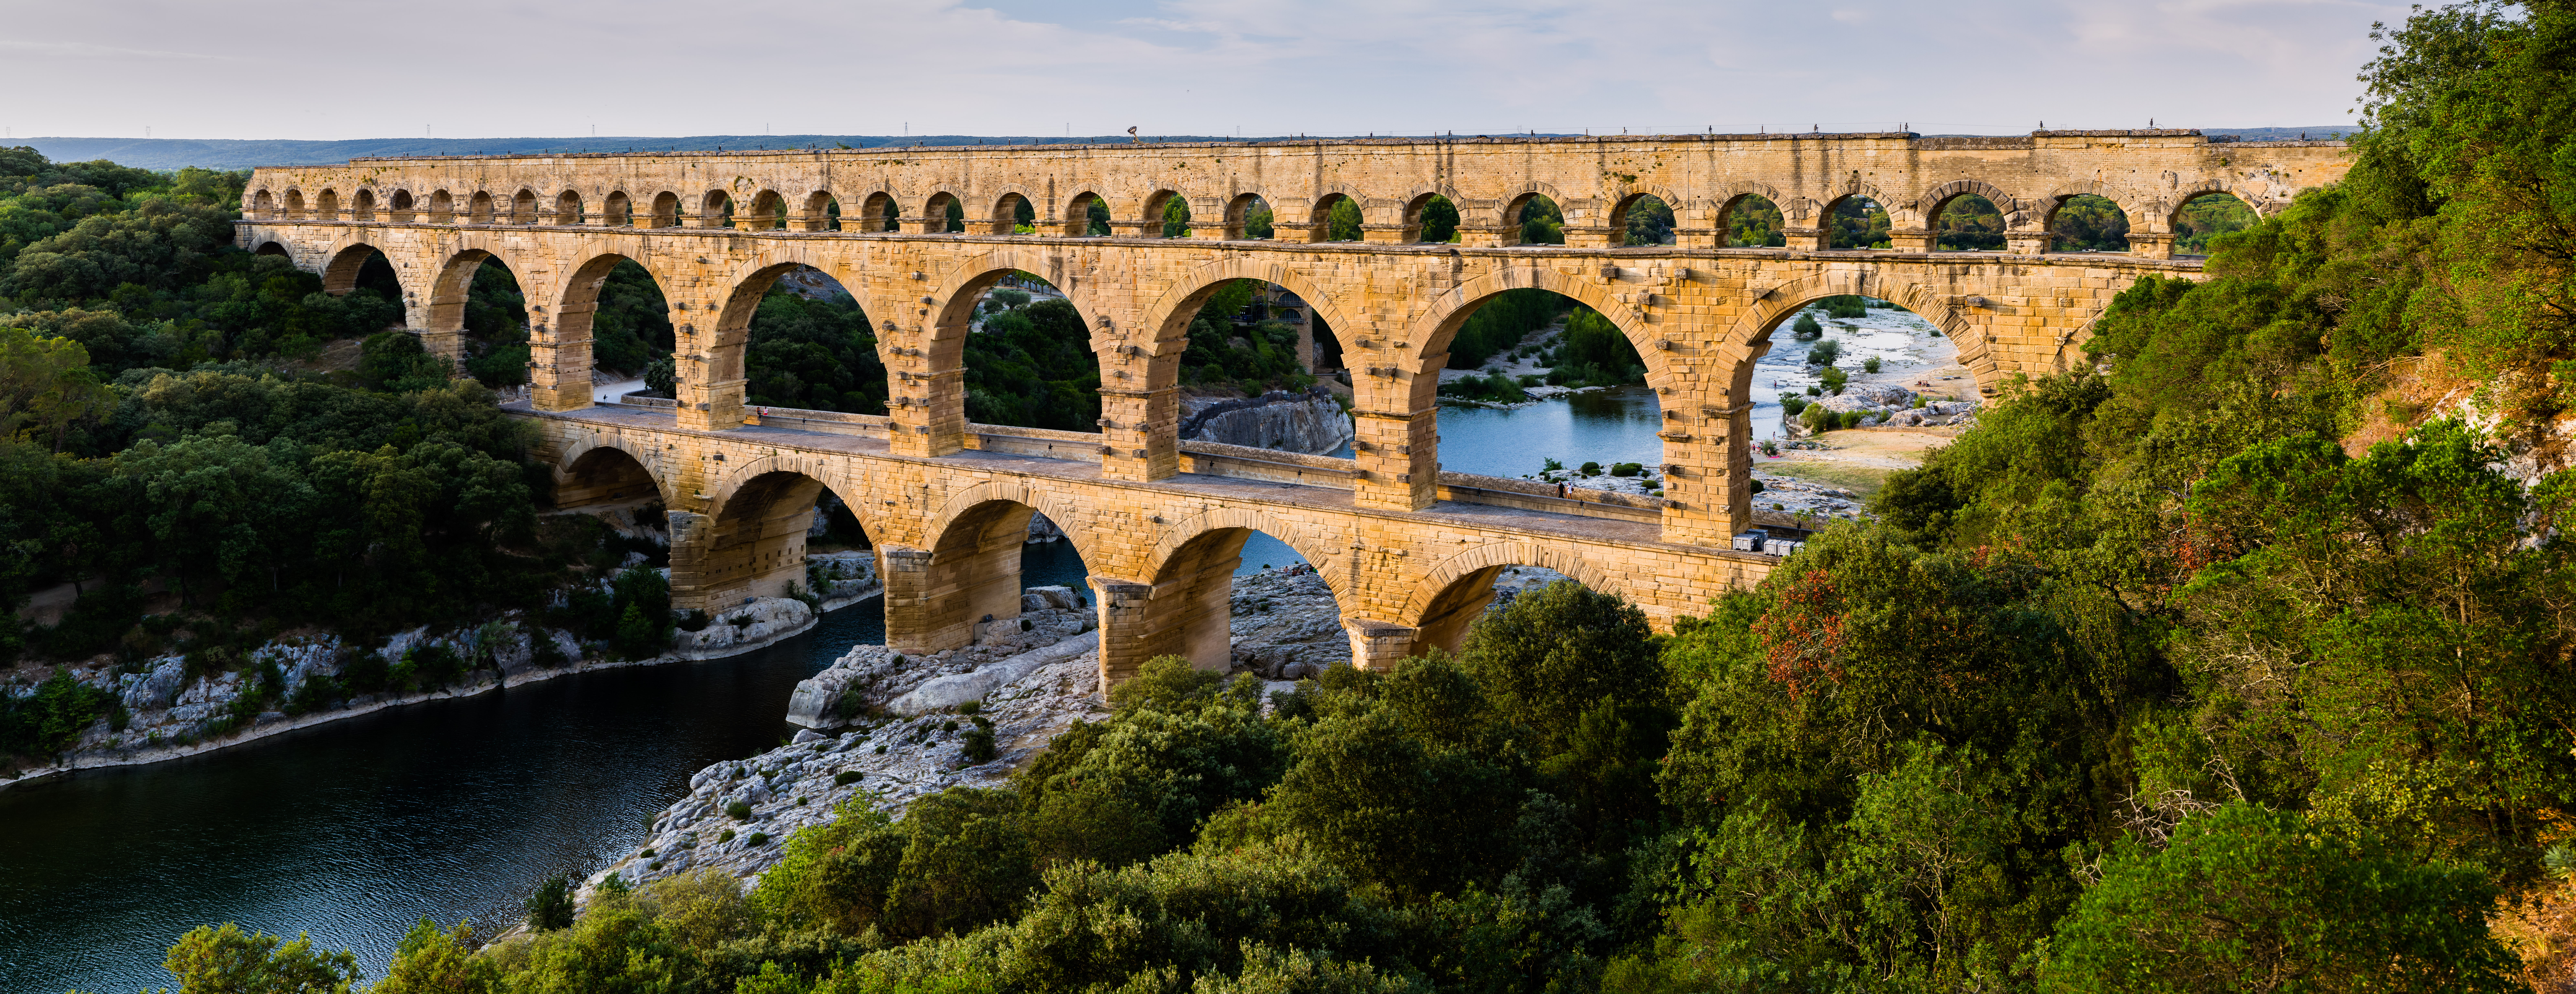 Pont_du_Gard_BLS.jpg